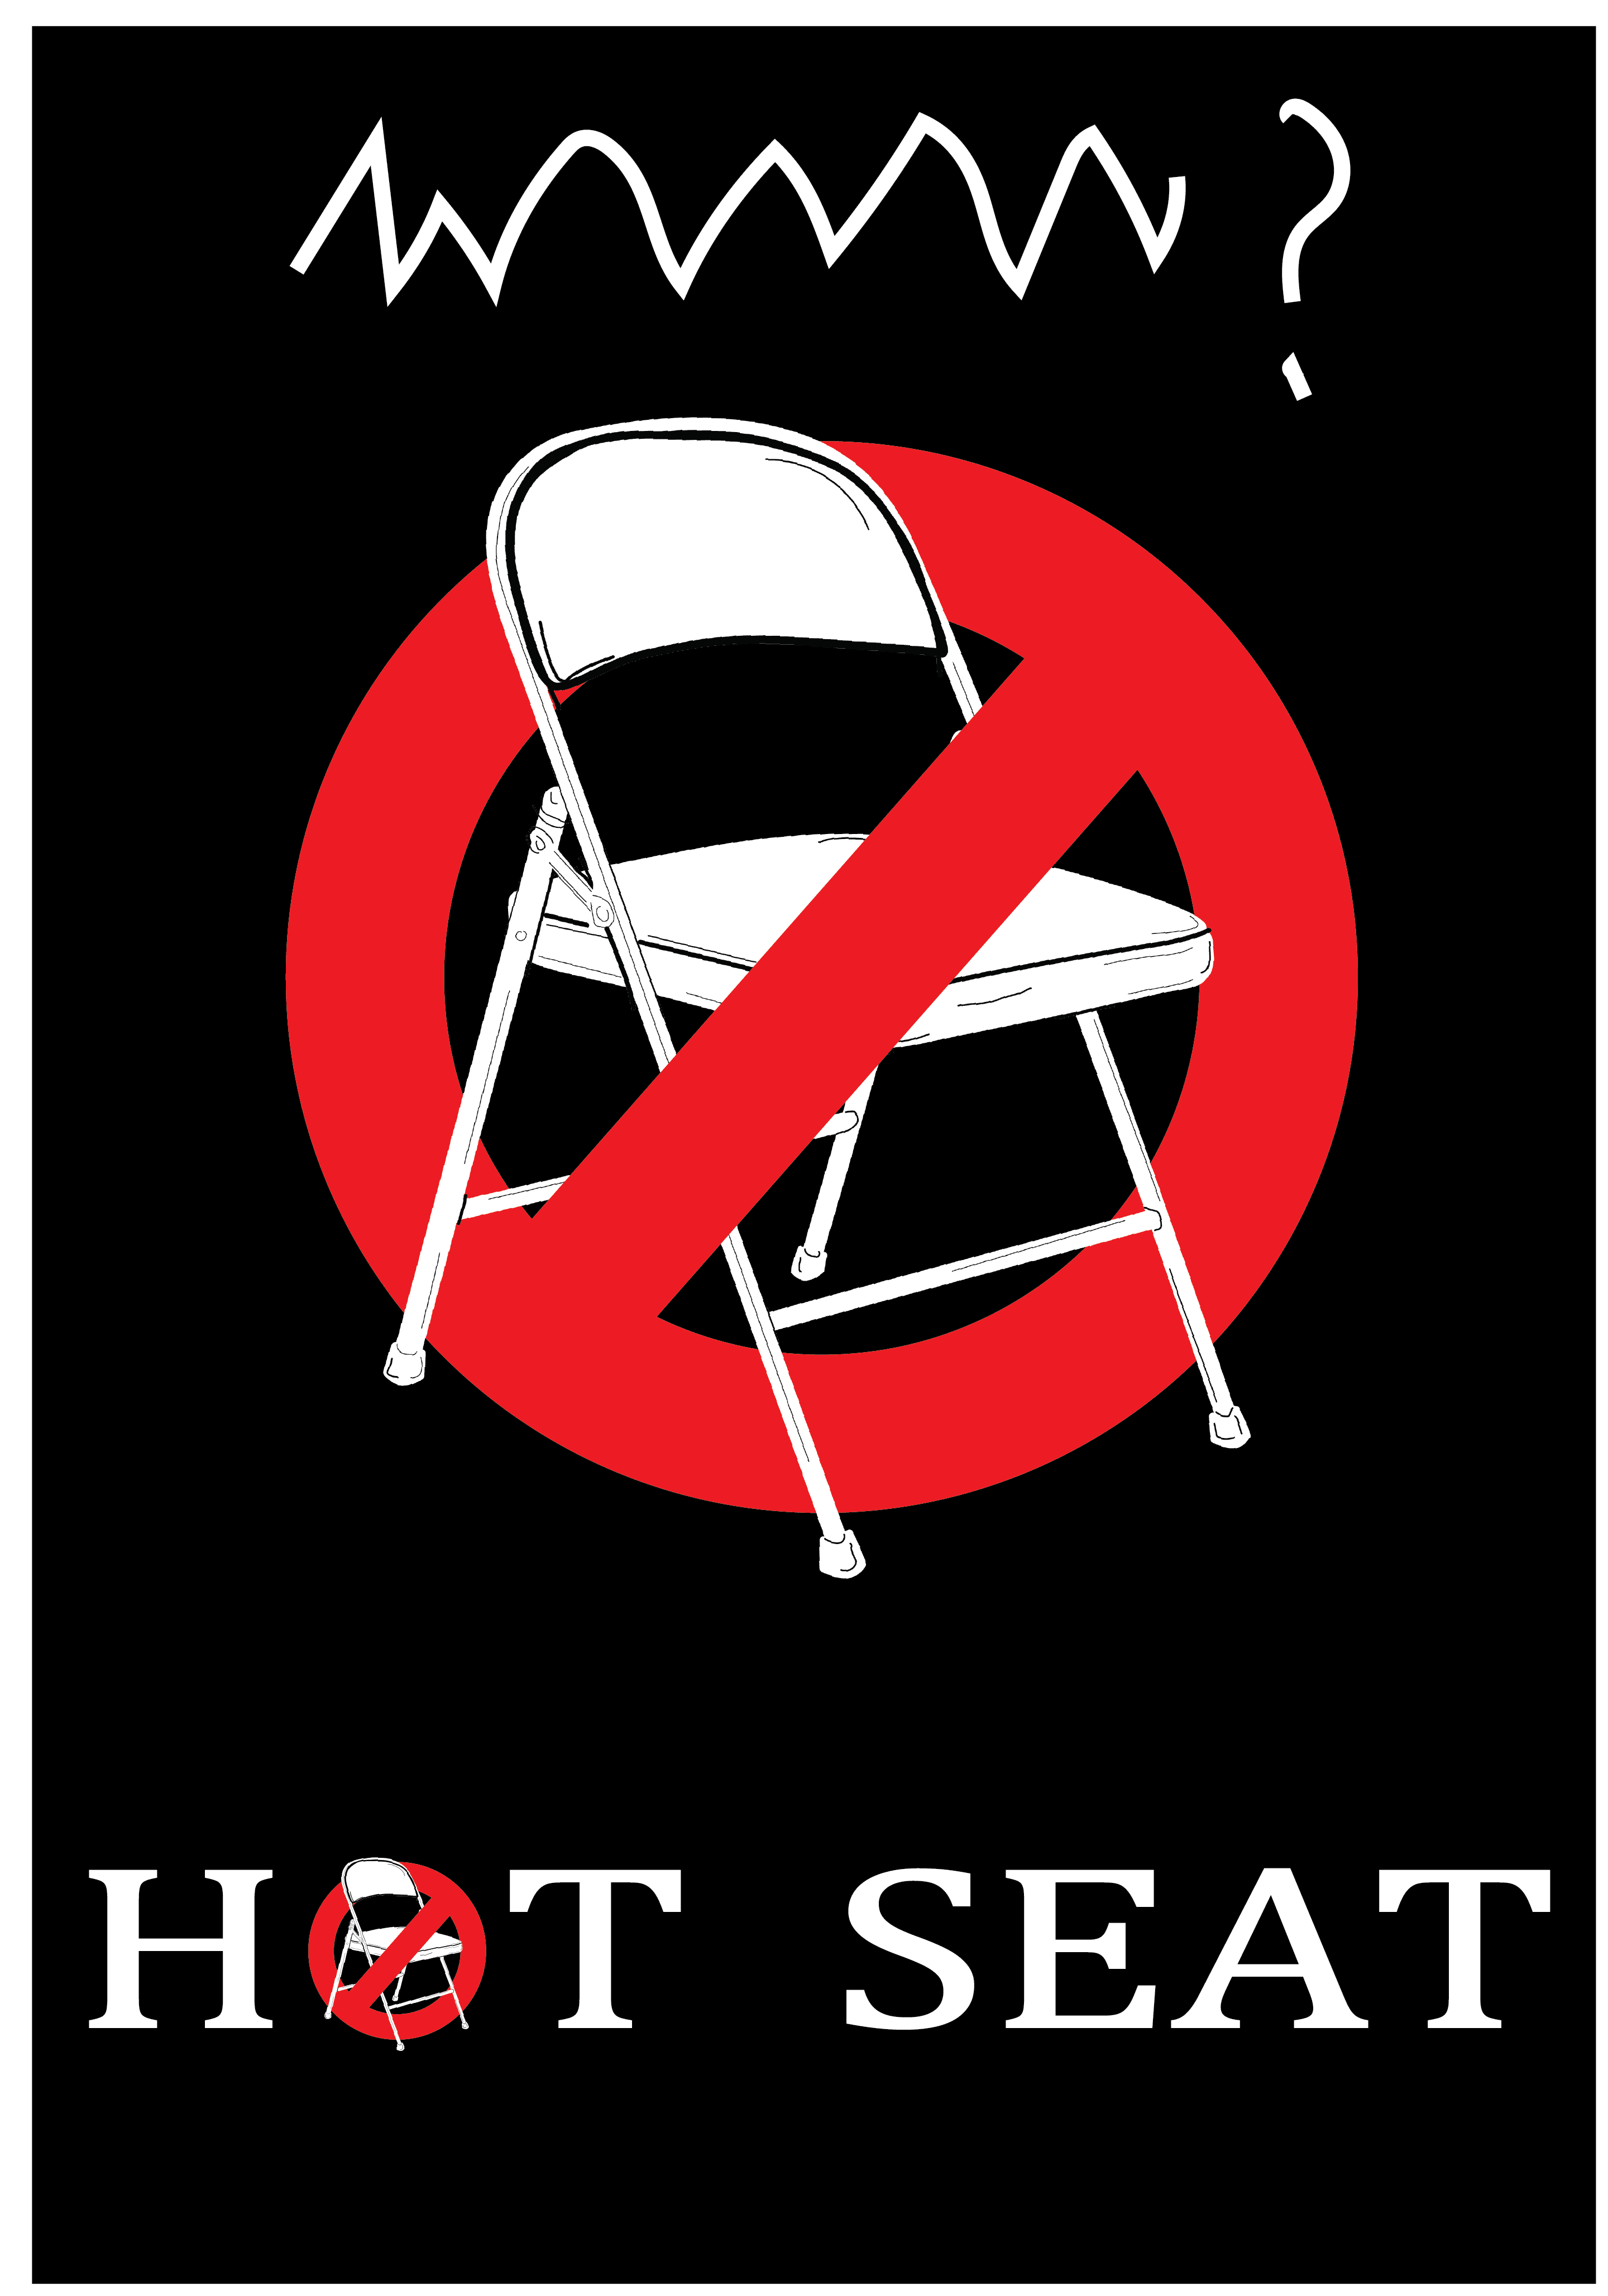 CryptoChairs #005 Hot Seat